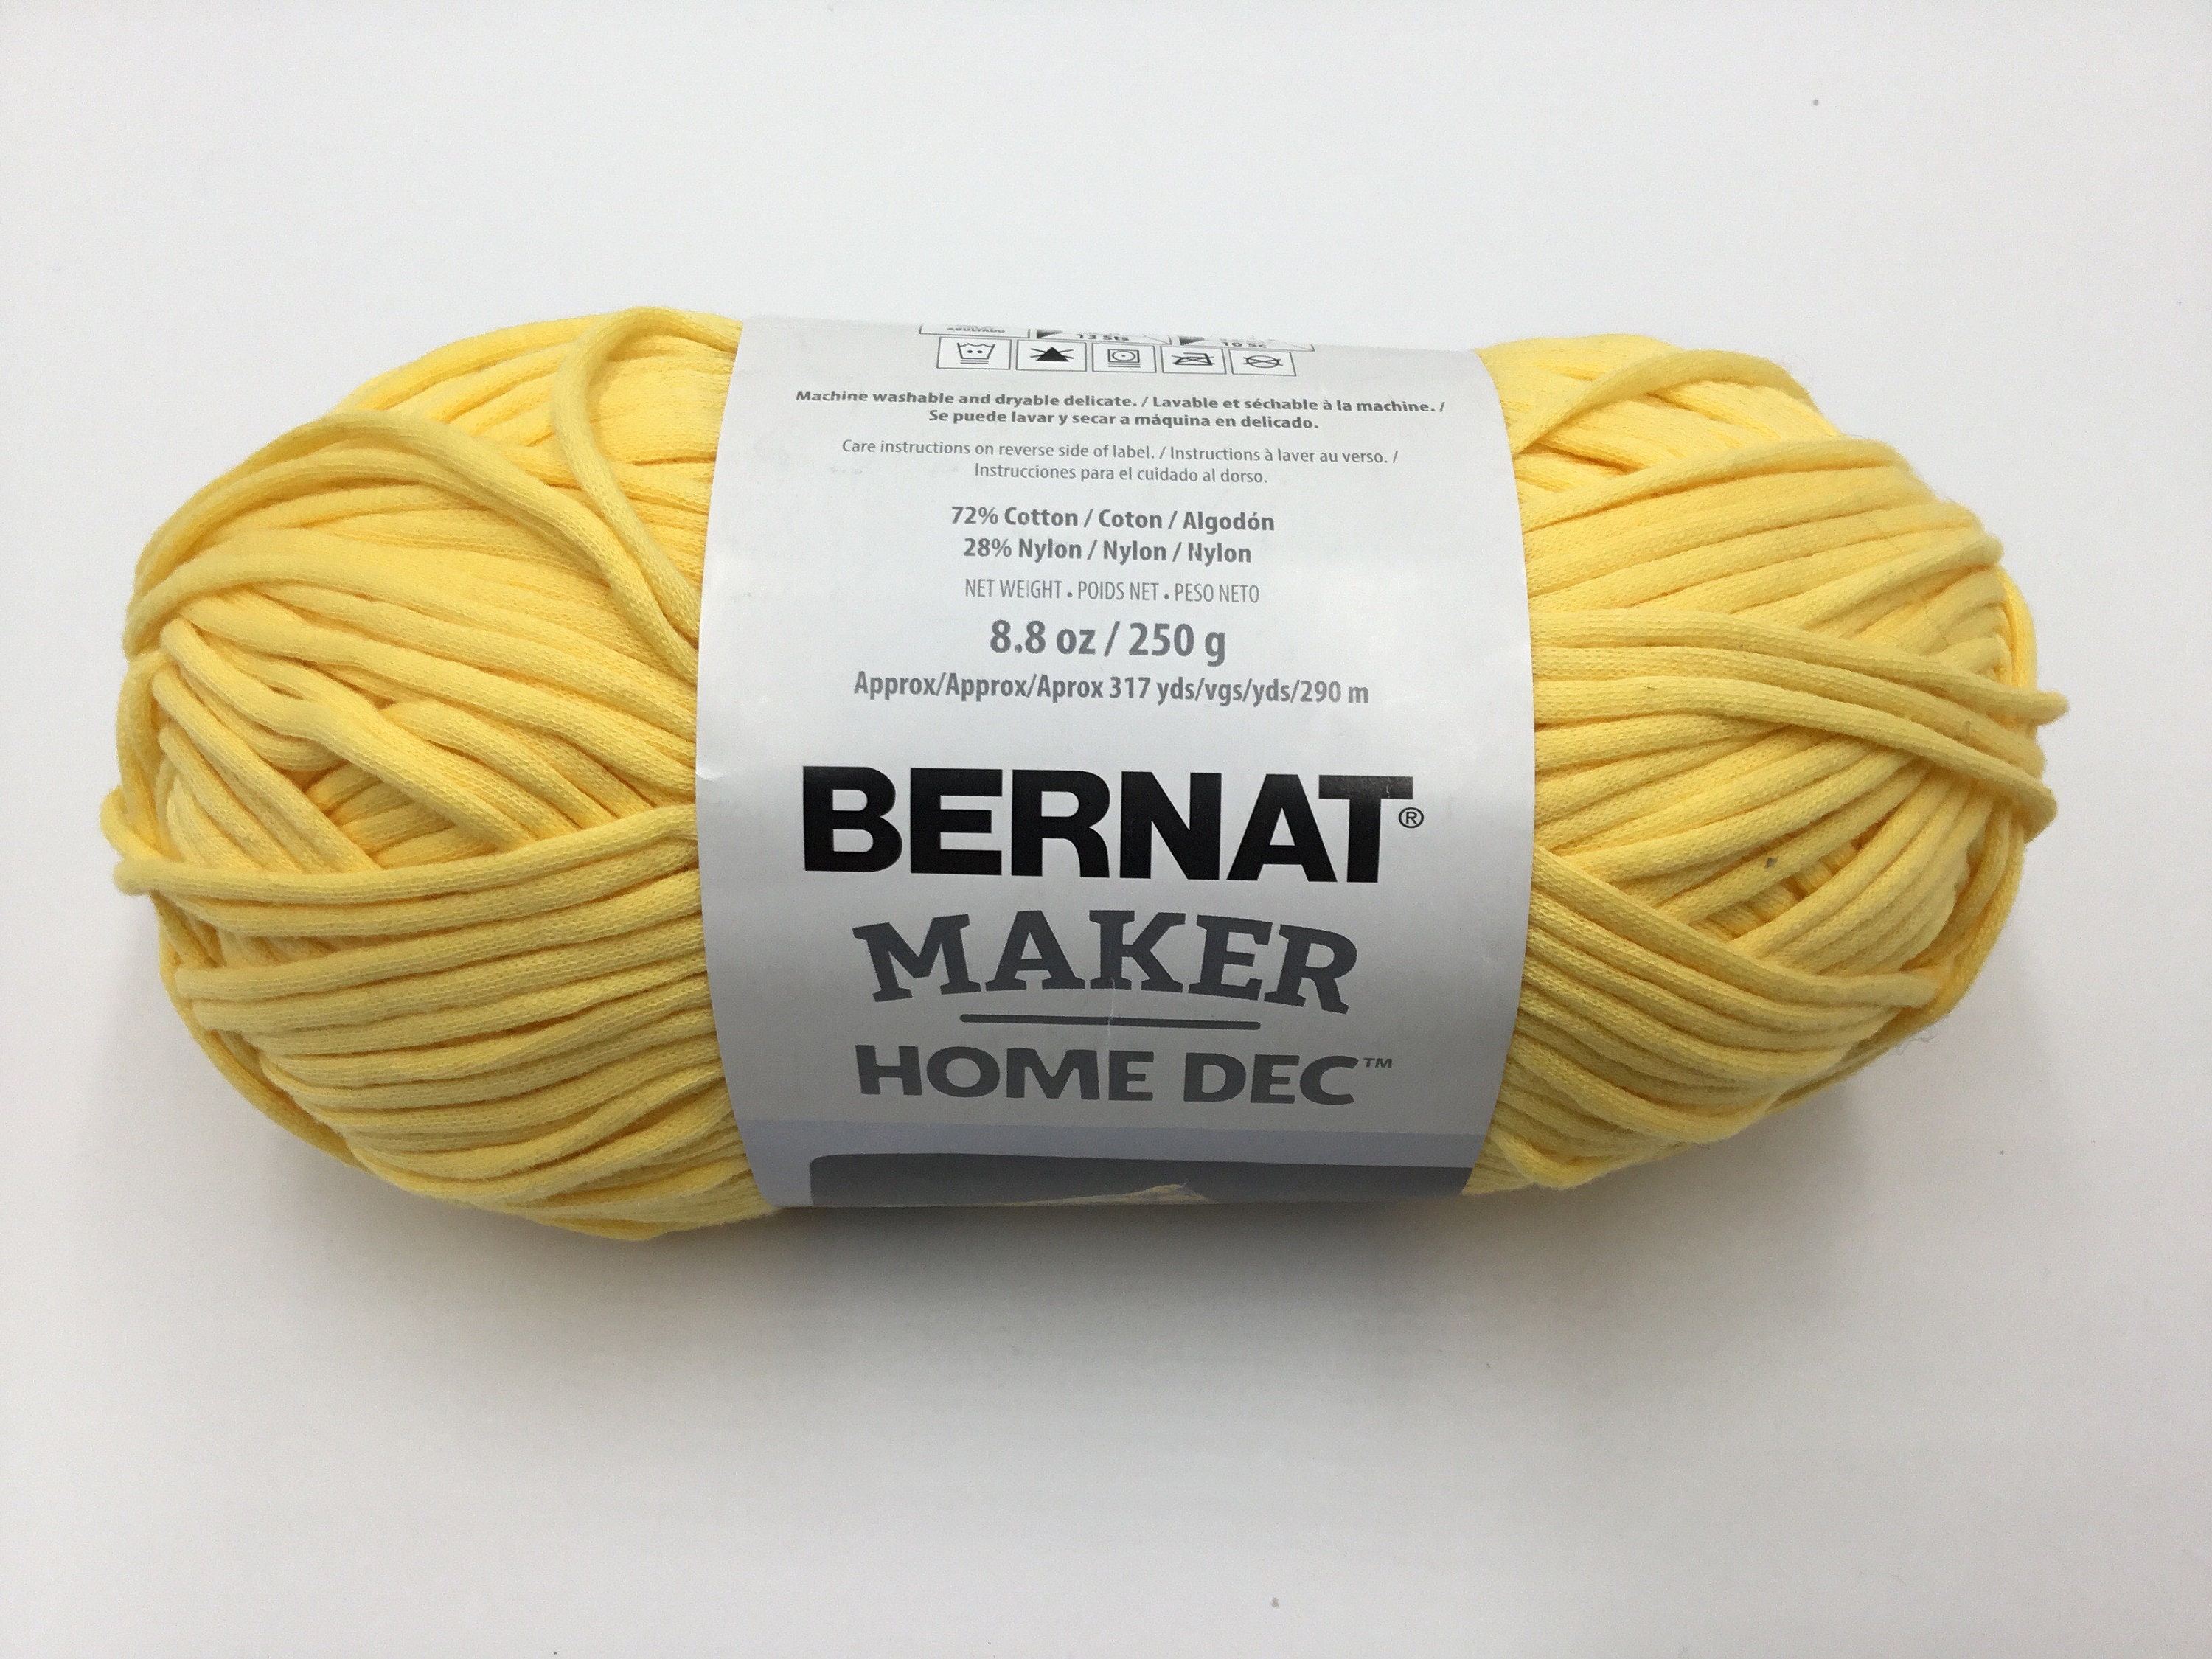 Bernat Maker Home Dec Woodberry Yarn - 2 Pack of 250g/8.8oz